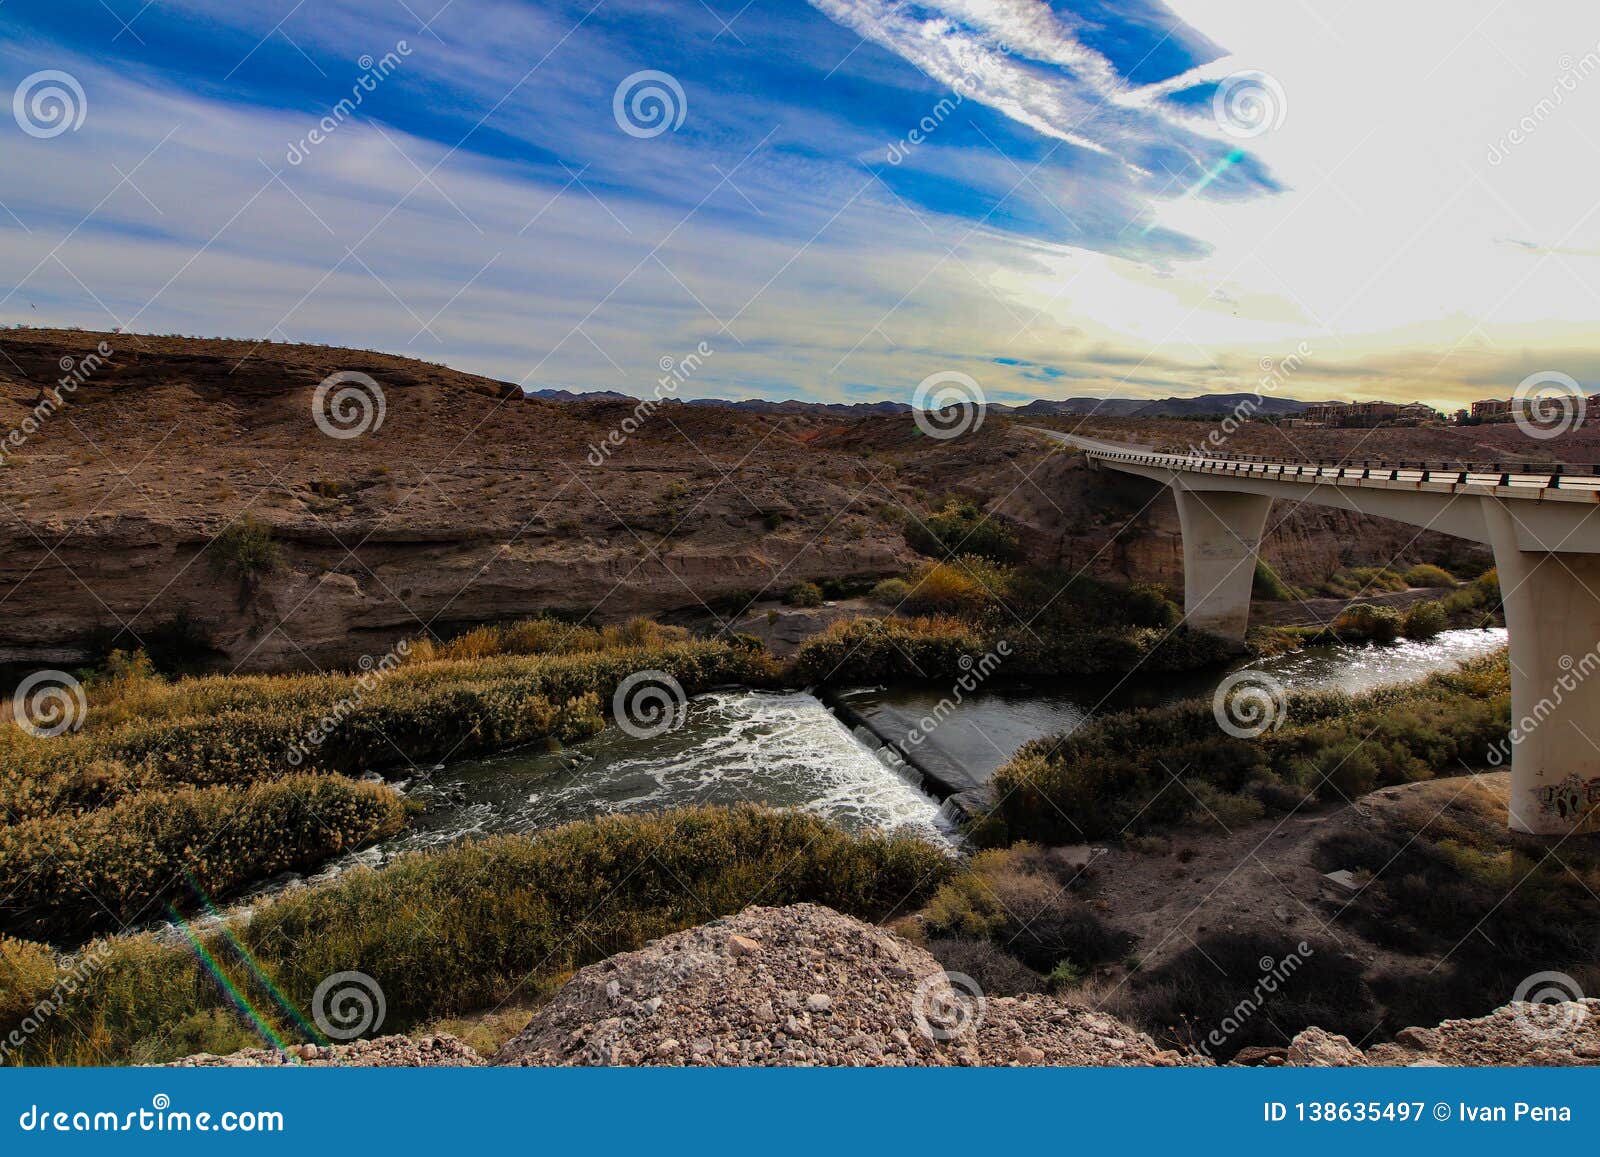 bridge over river in arizona desert.